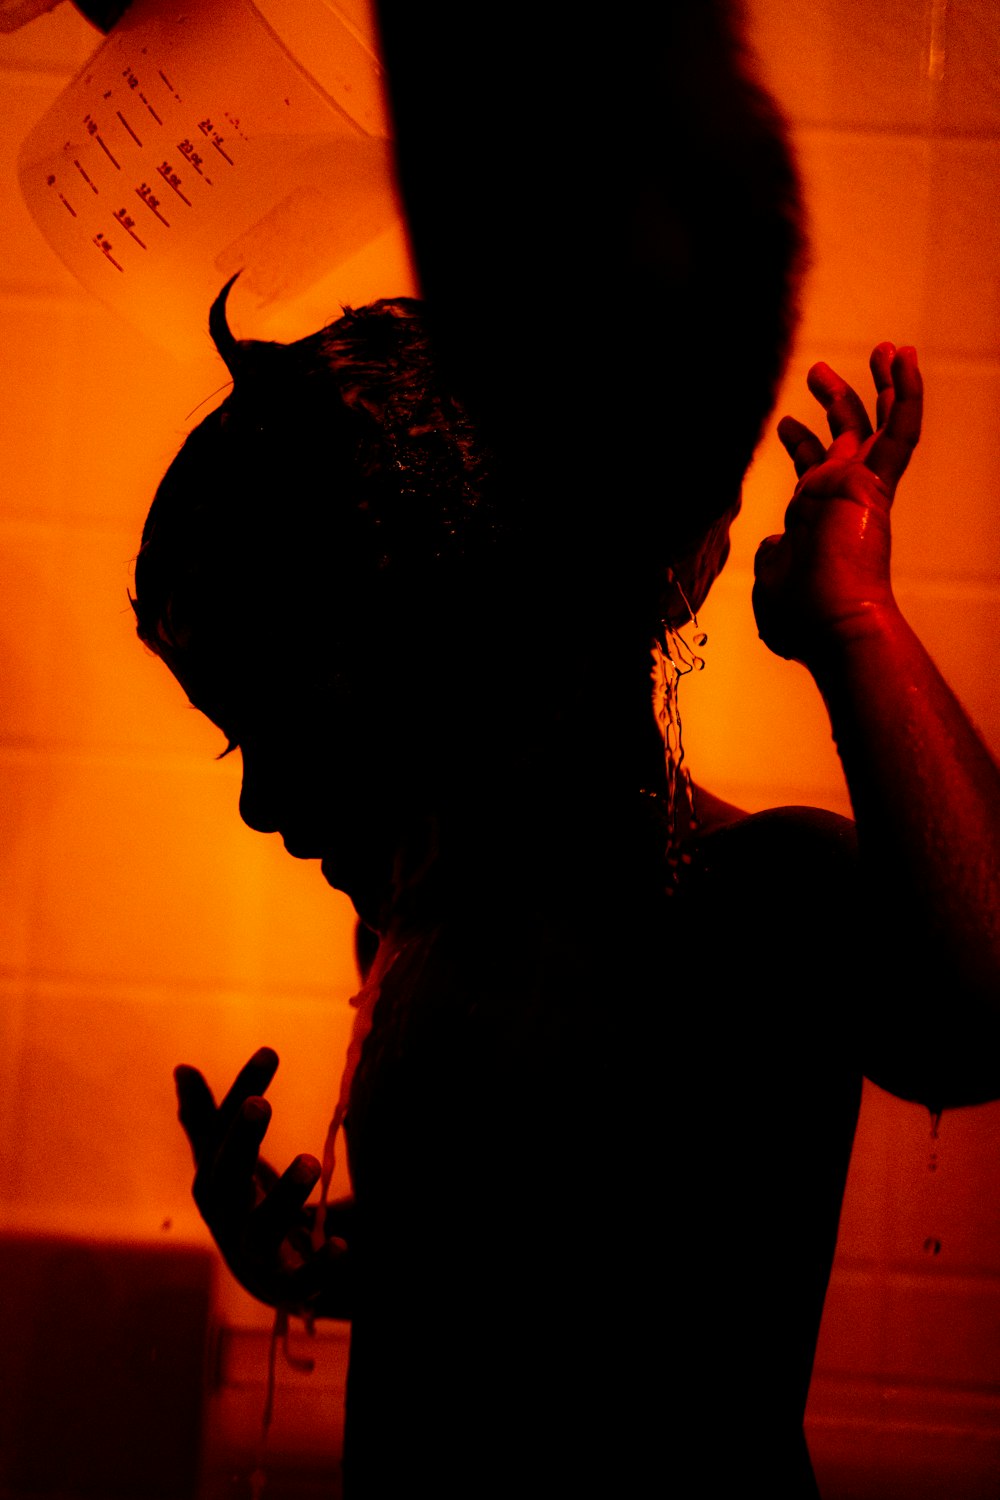 silhouette of woman in bathtub